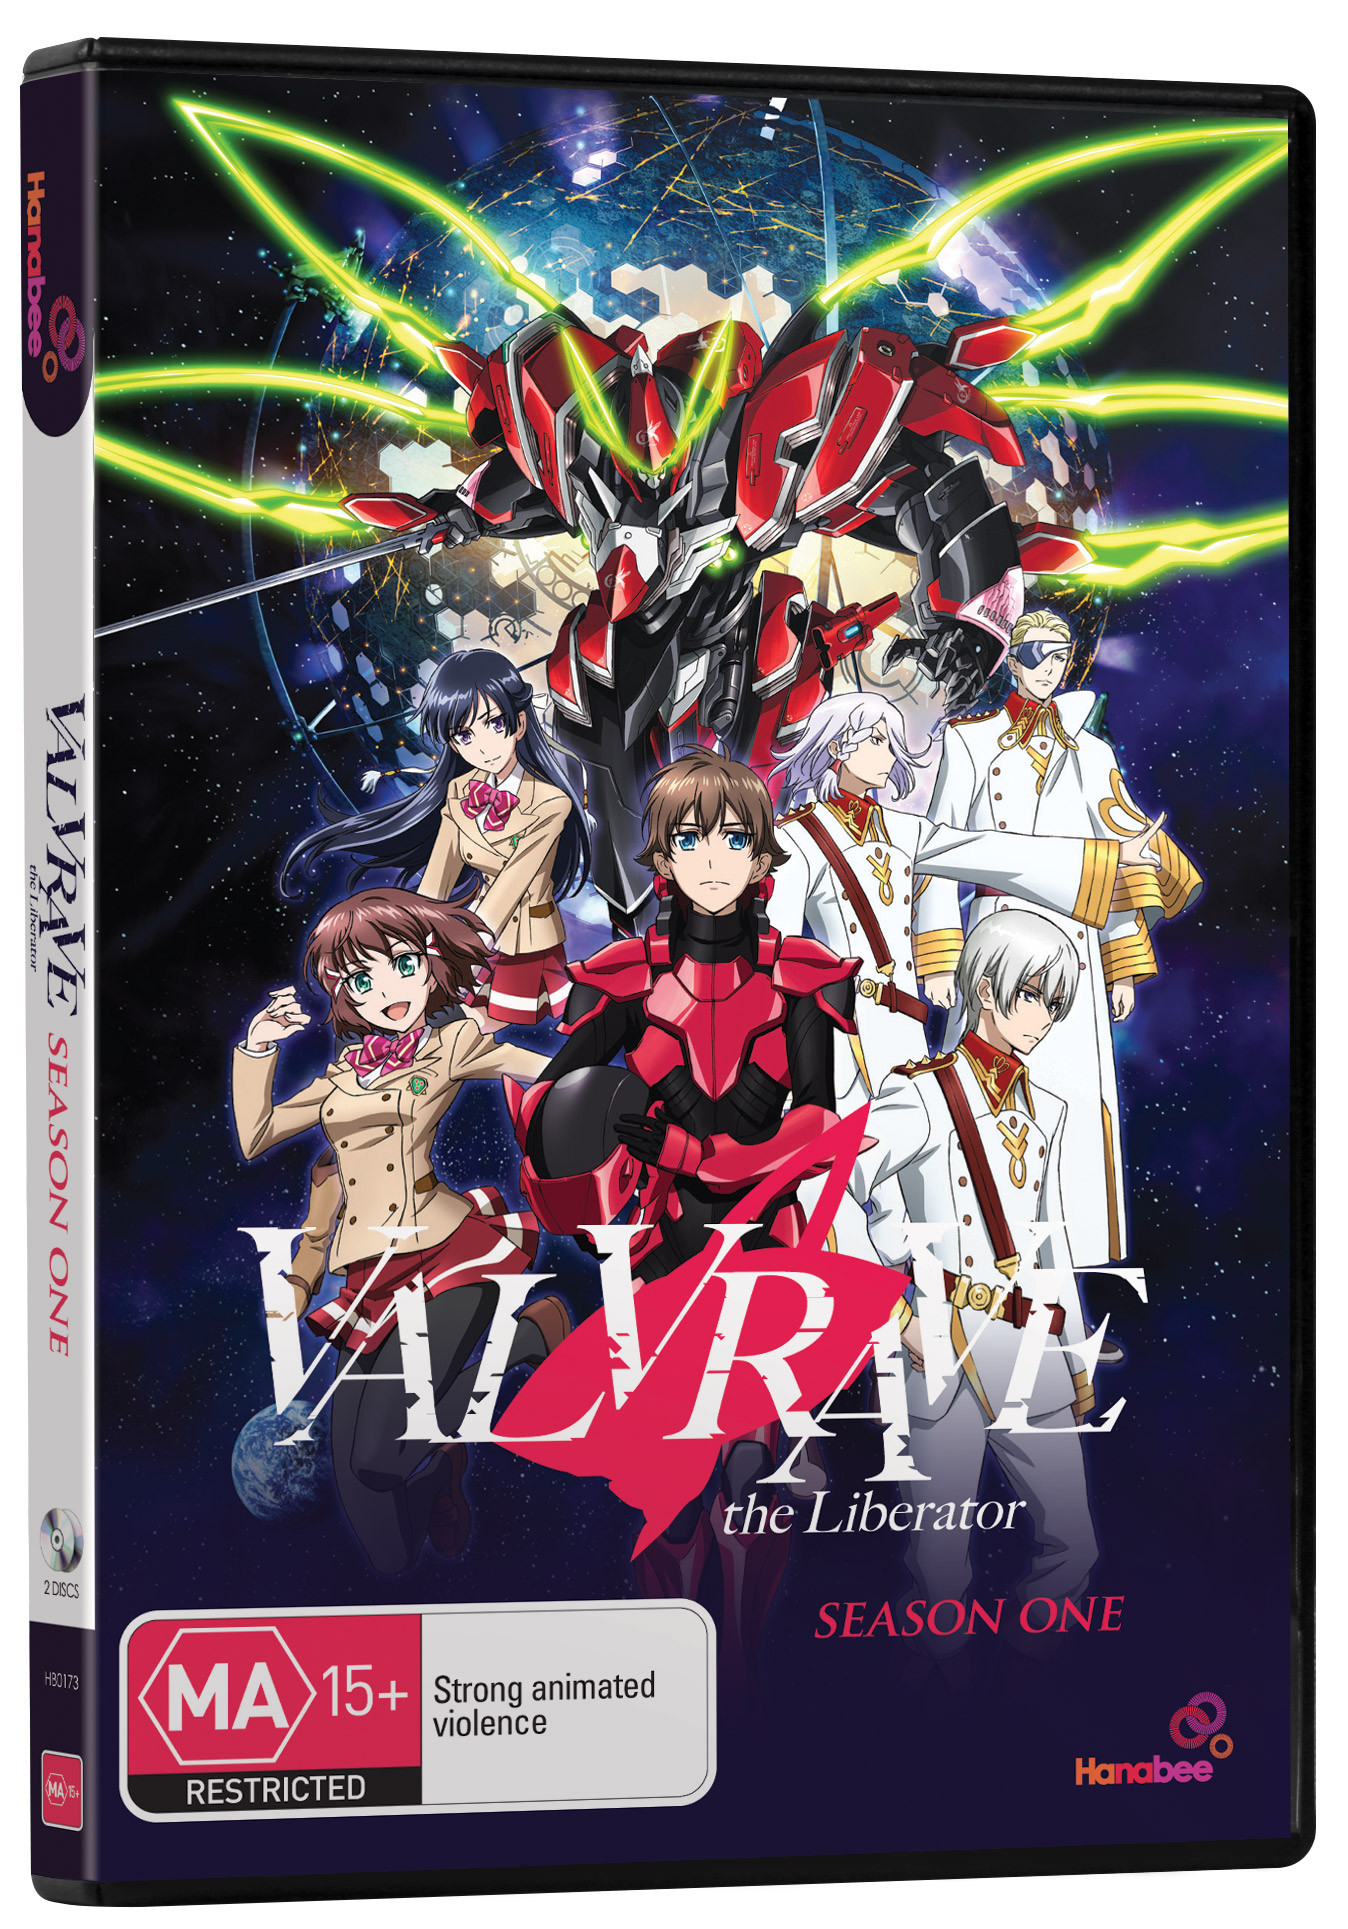 Valvrave The Liberator Complete 2nd Season (Blu-Ray, 2015) Aniplex Anime New